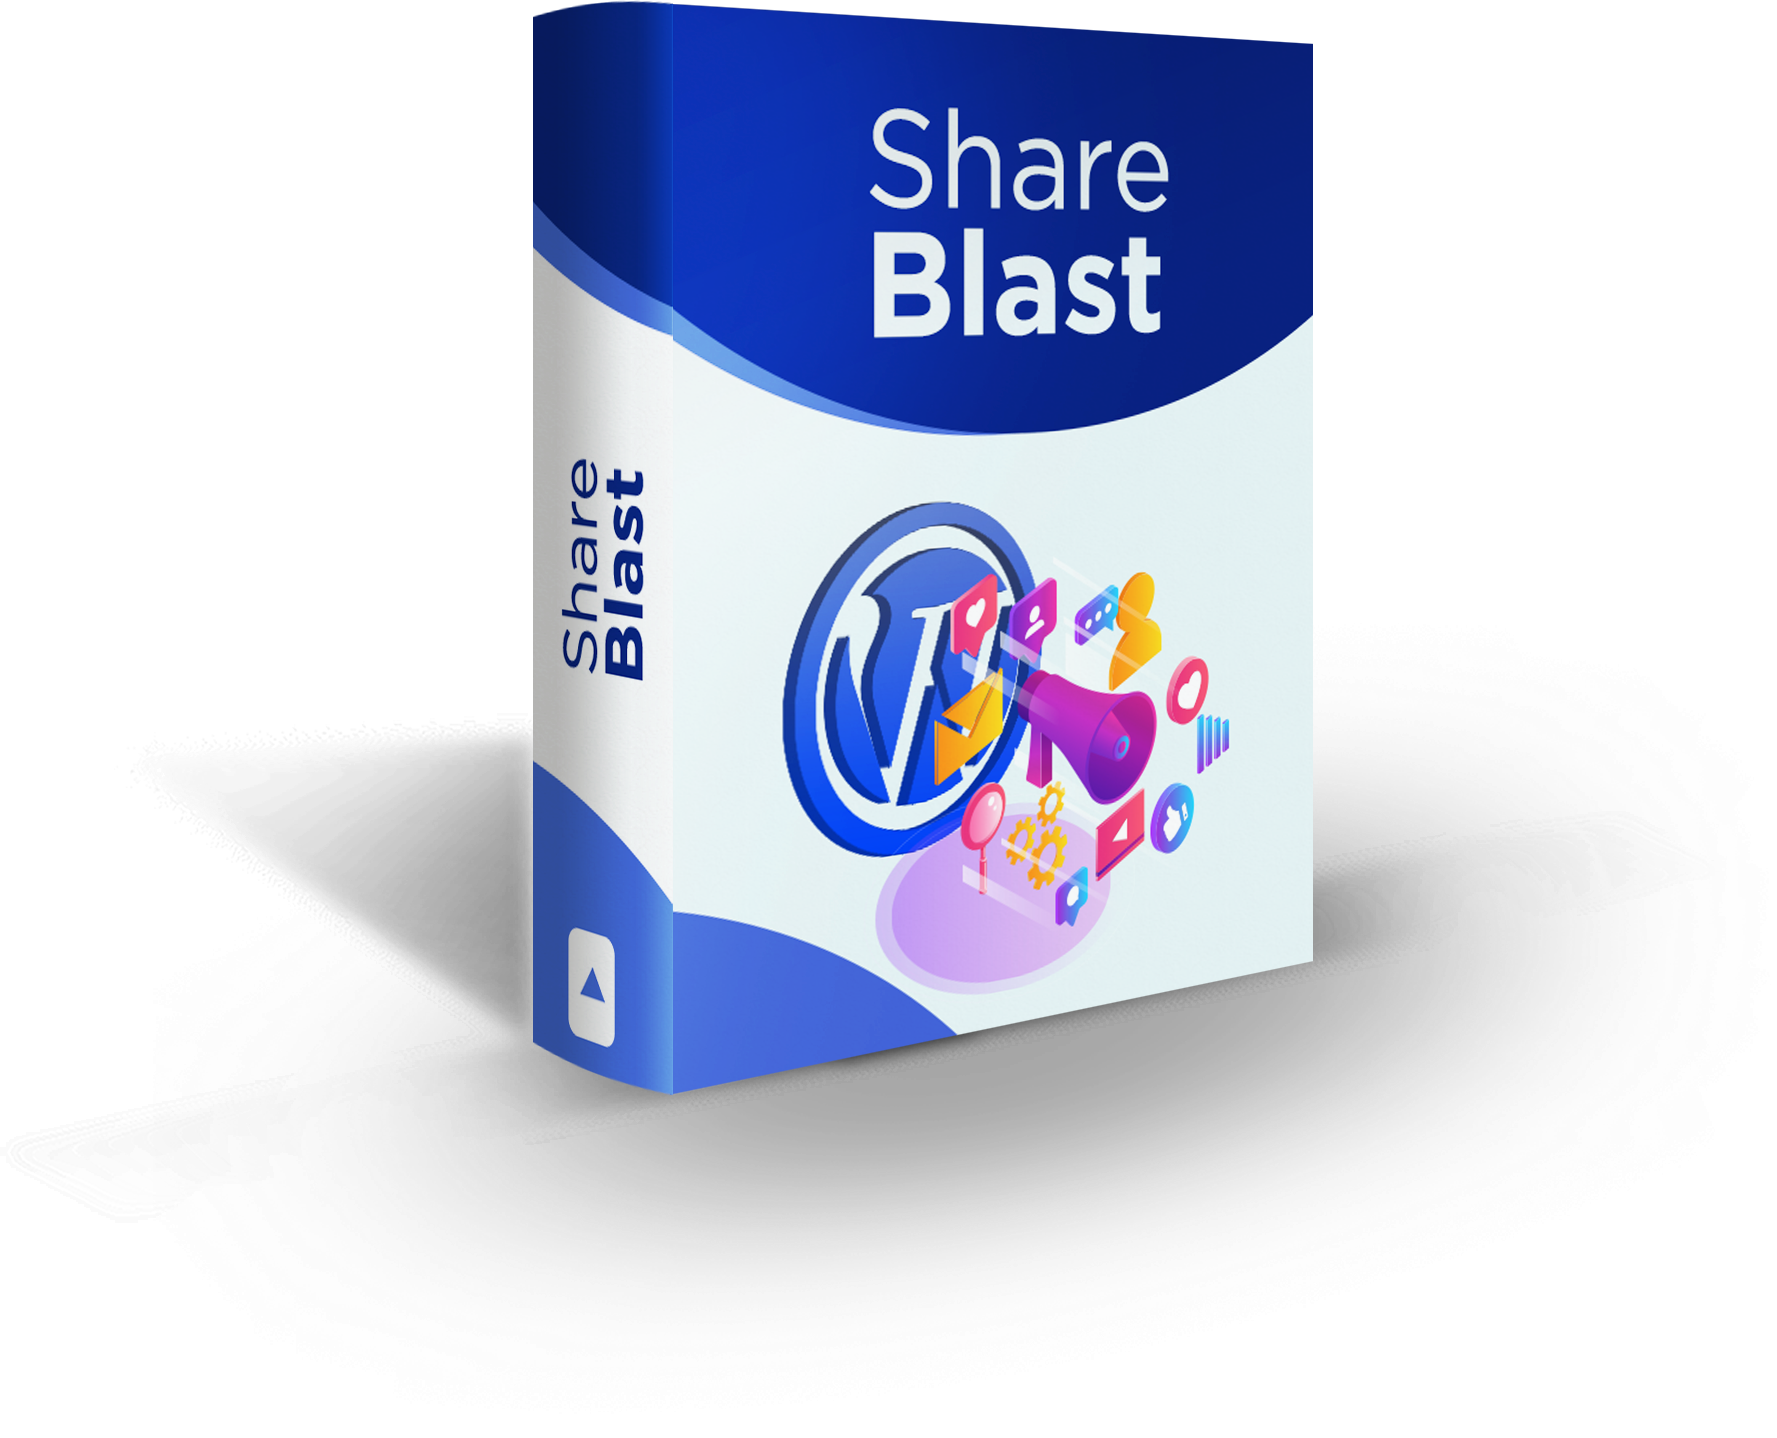 Share Blast